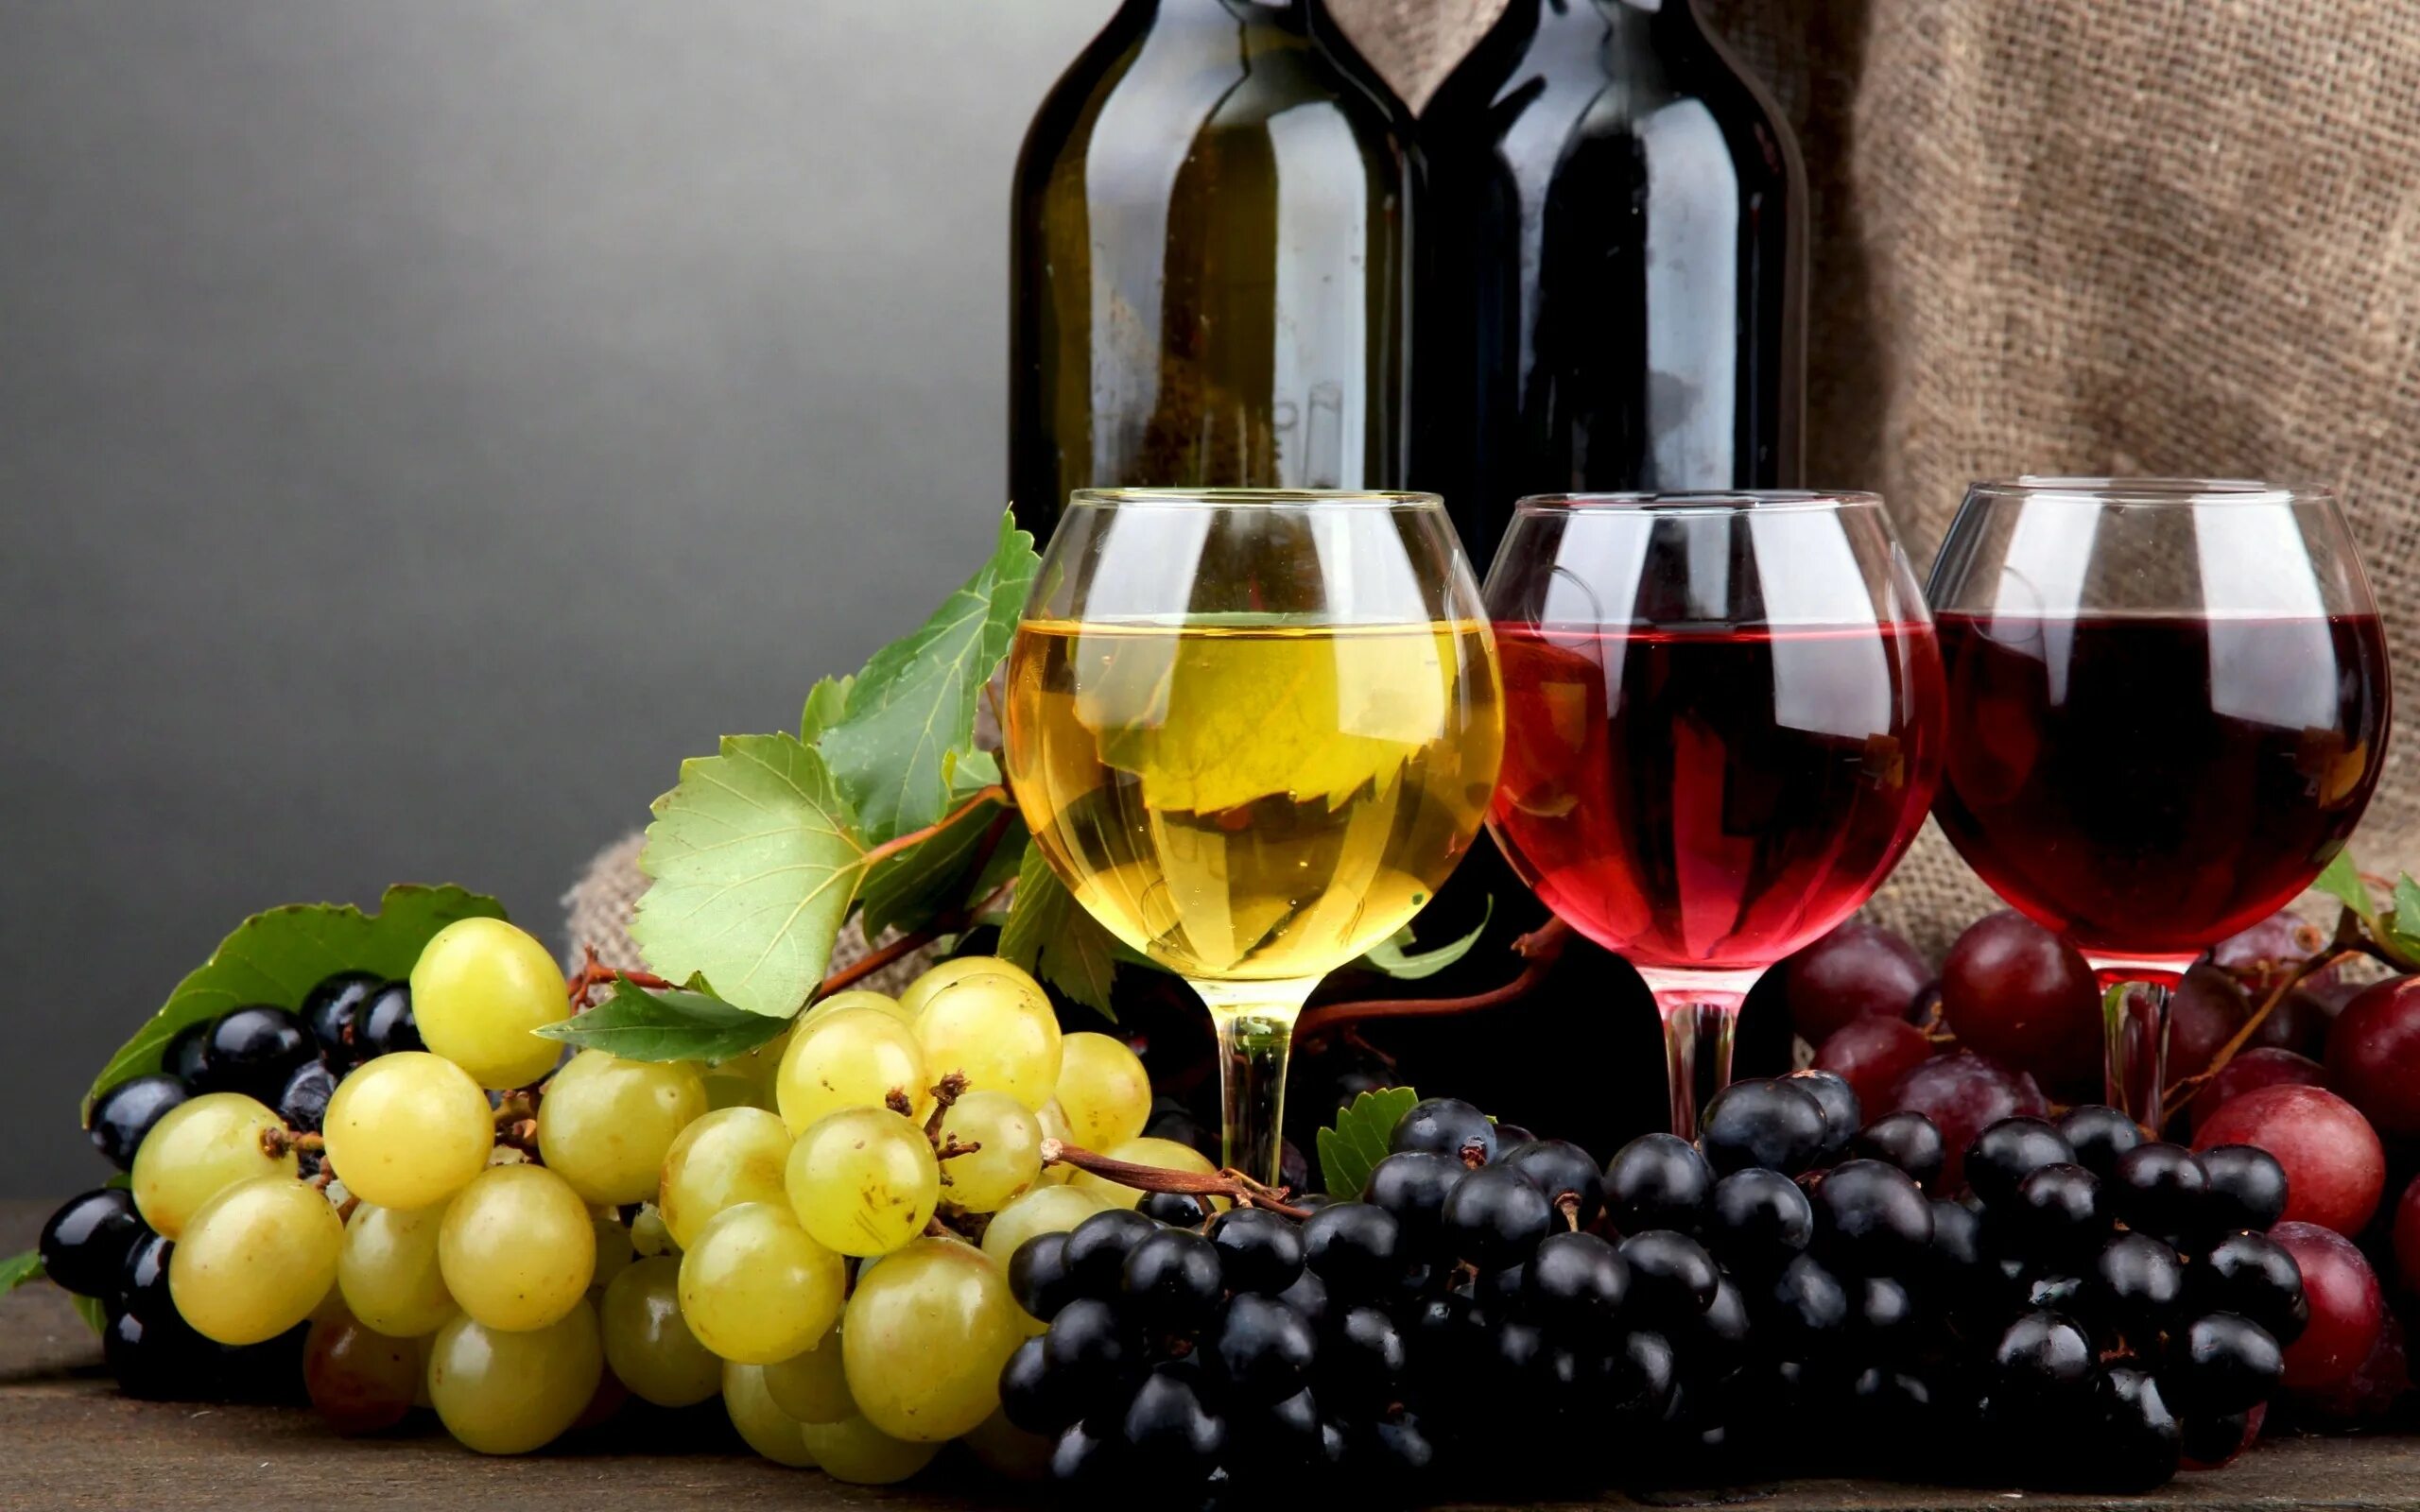 Вторая половина вина. Молдавия виноградники и вино. Грузия vino vinograd. Красное вино. Бокал с вином.